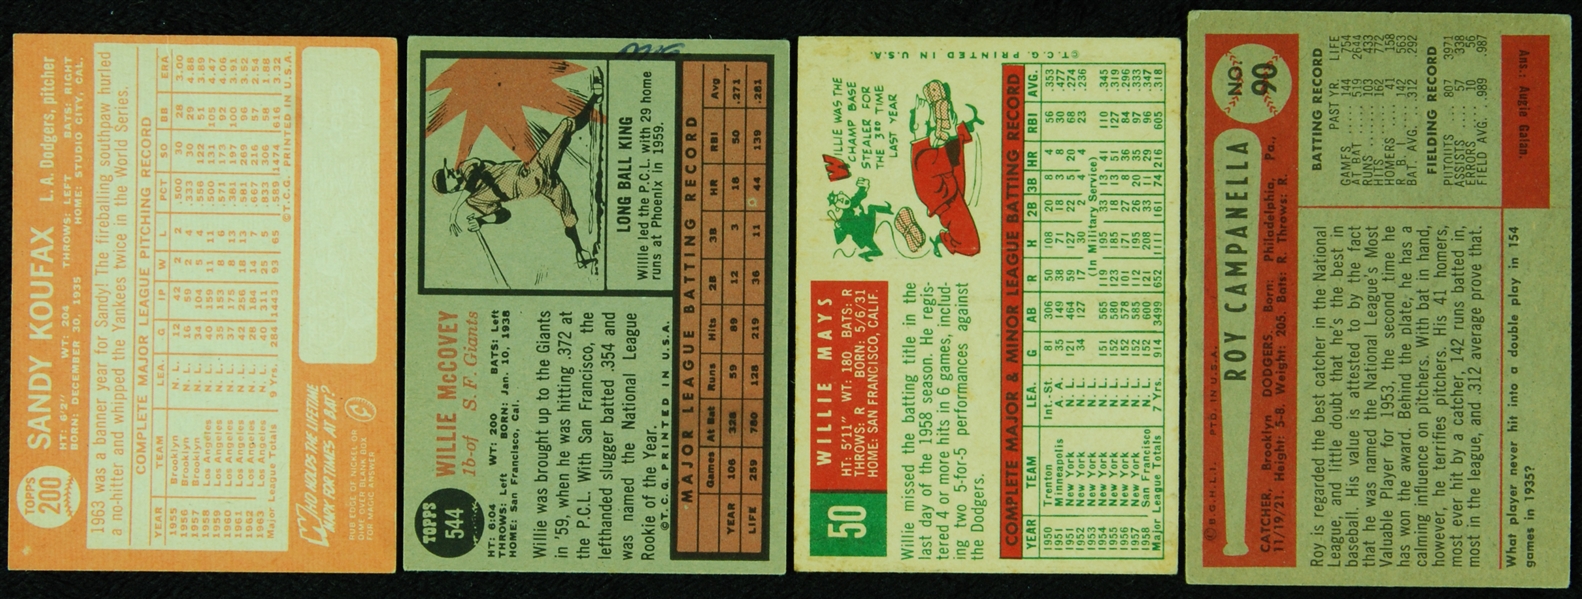 1941-71 Vintage Baseball Hall of Fame Lot (12) with Campanella, Koufax, Greenberg